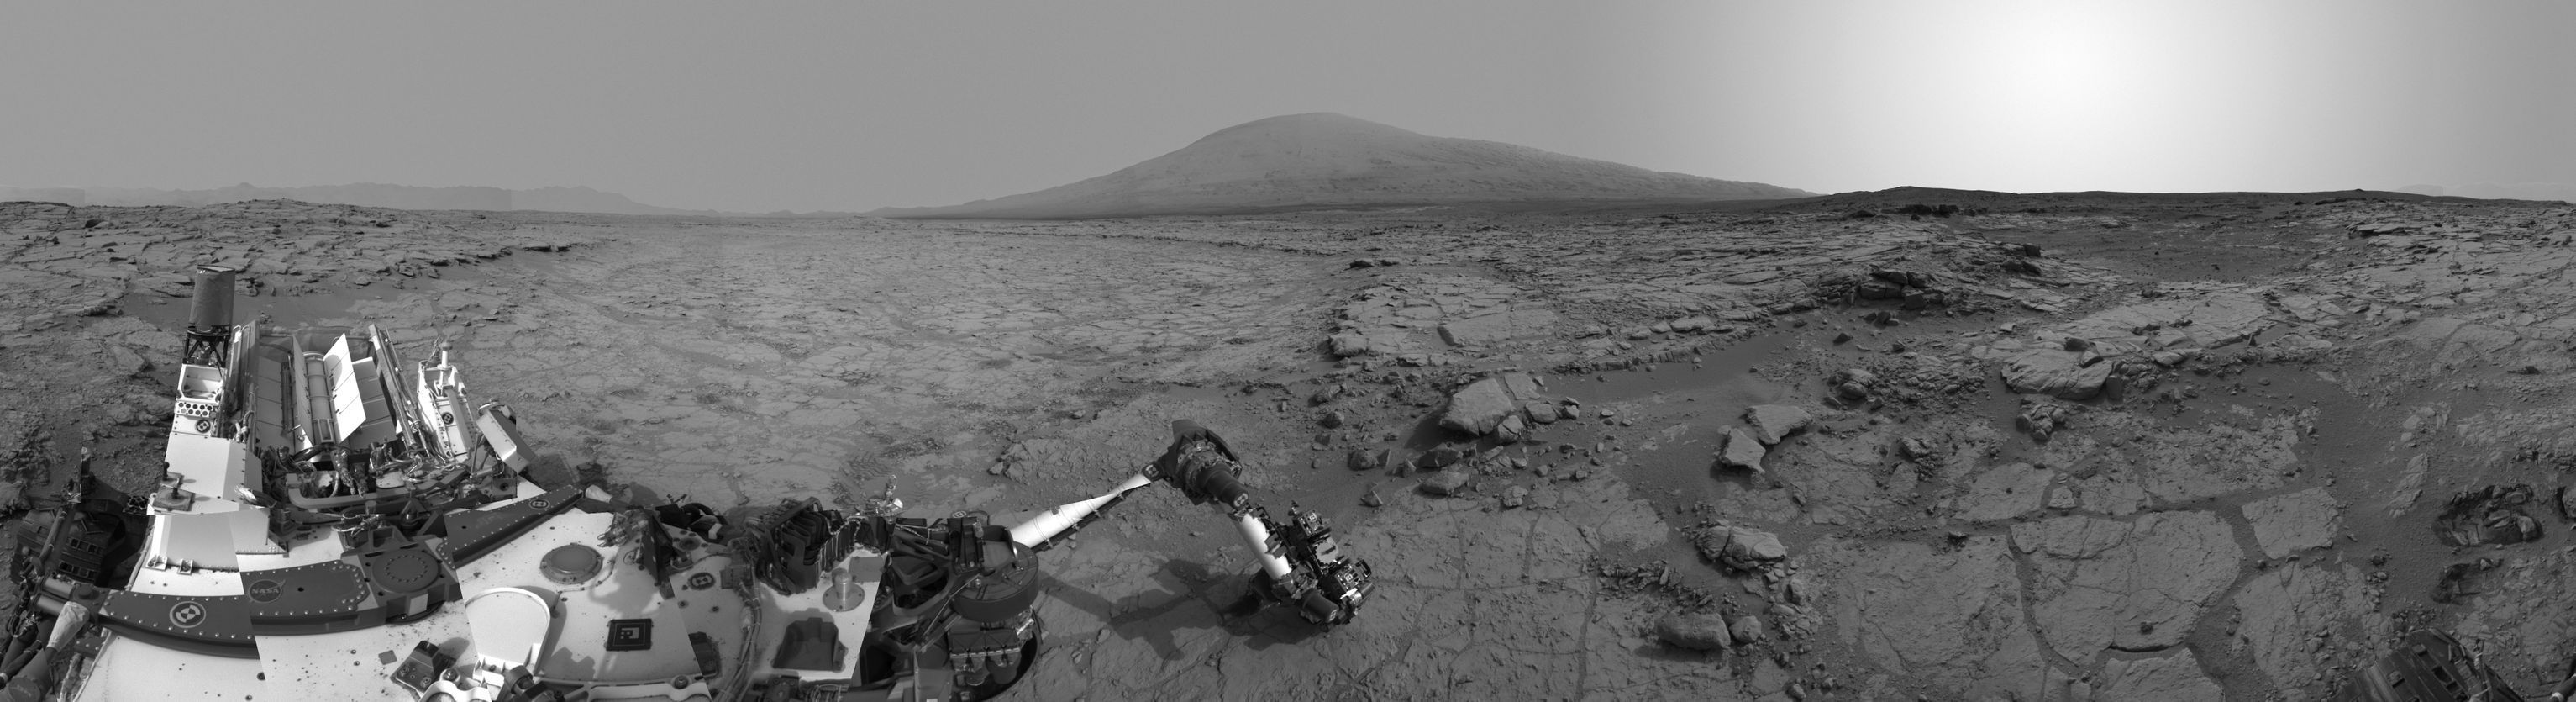 Curiosity, Mars